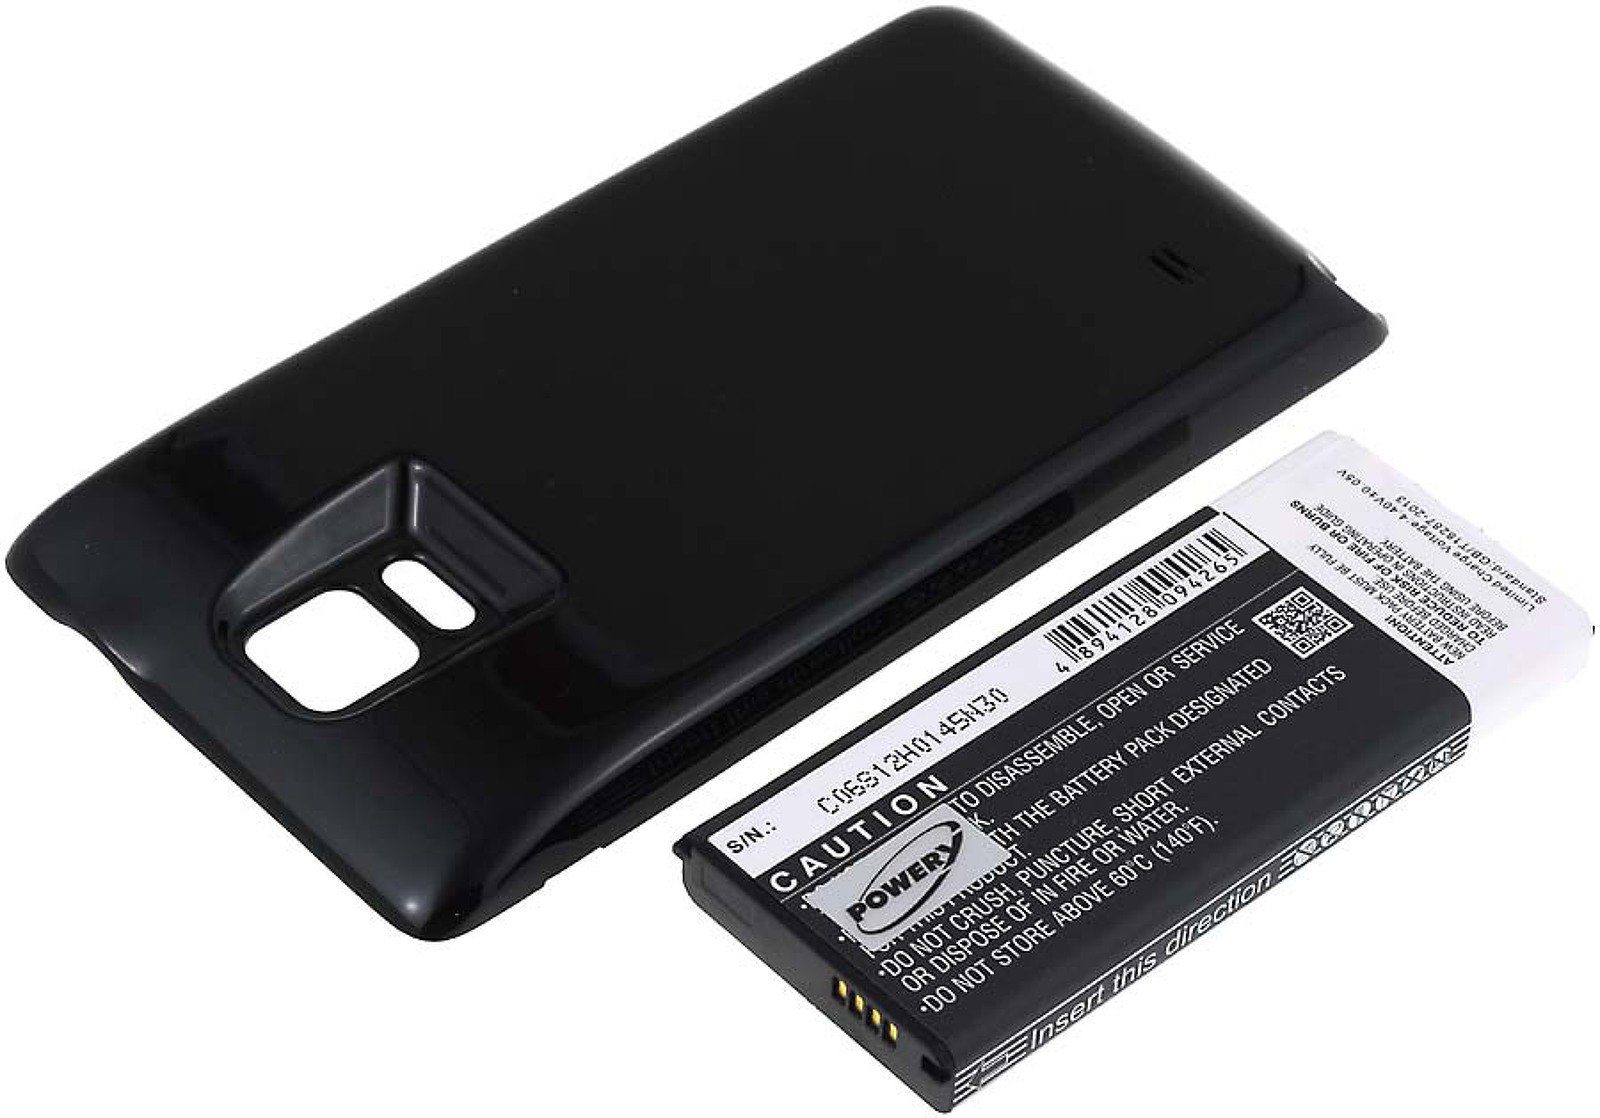 Schwarz (3.9 SM-N910F 6400mAh Akku Samsung für Smartphone-Akku Powery V) 6400 mAh